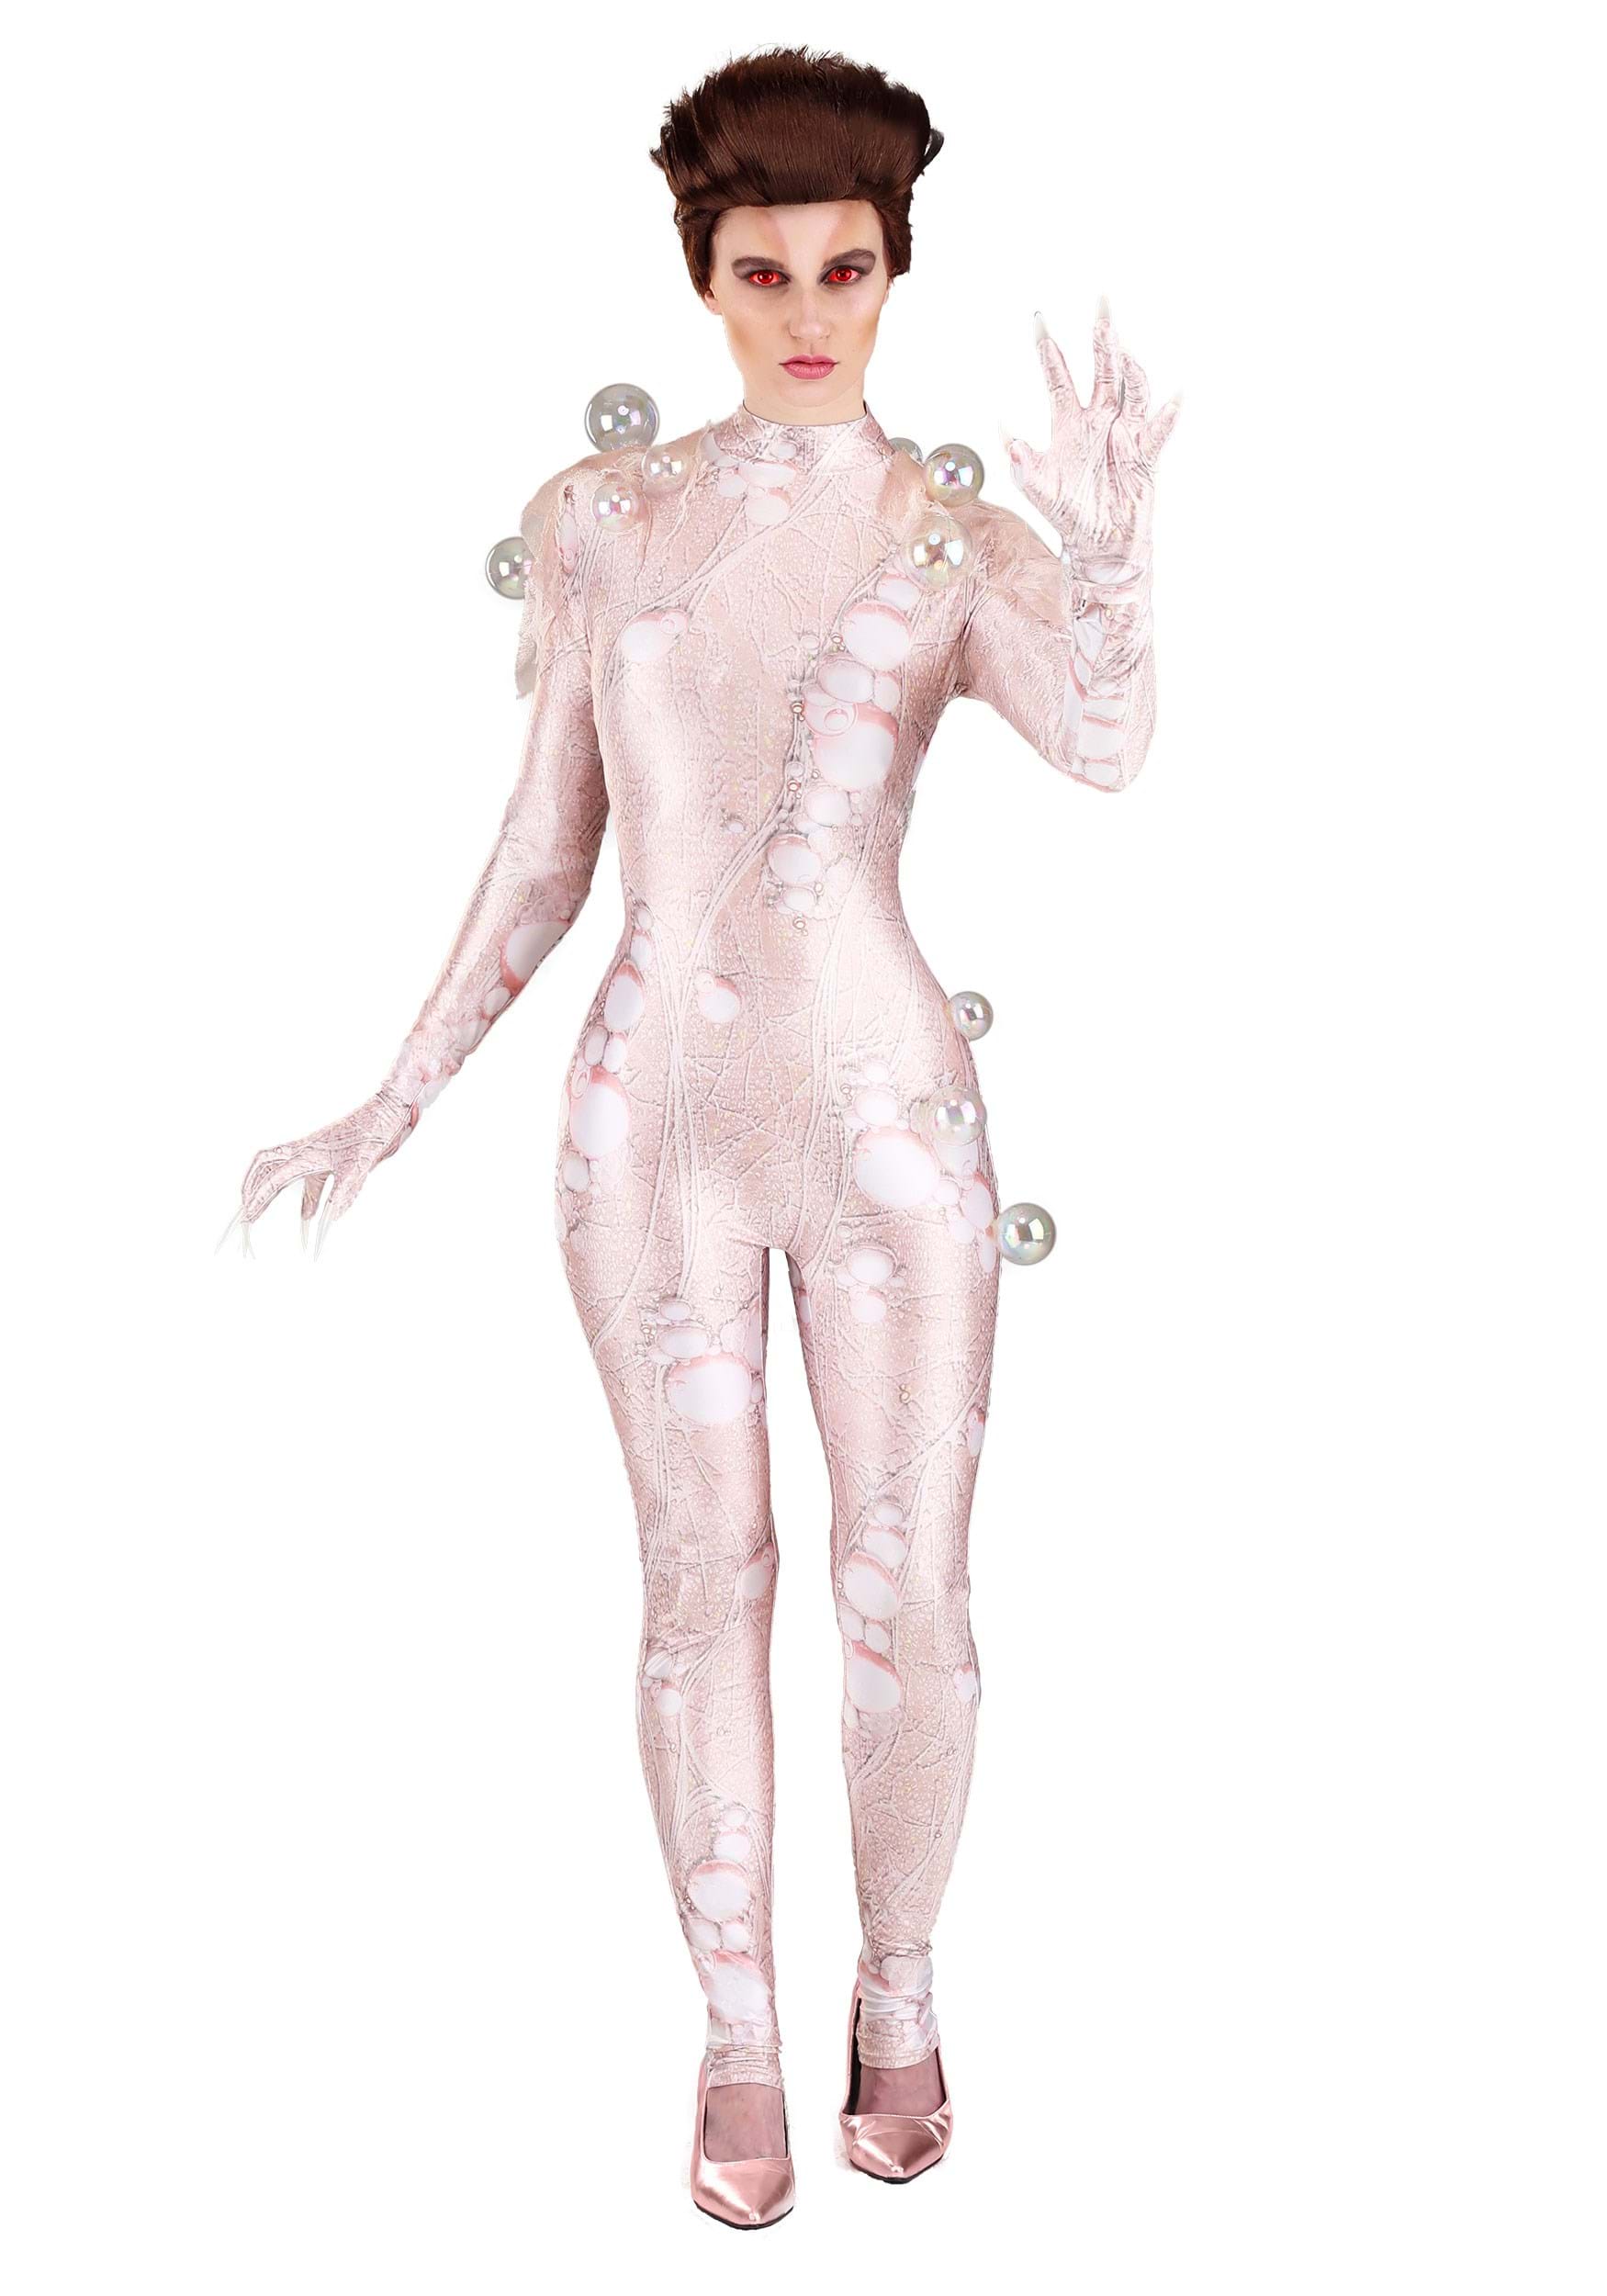 Photos - Fancy Dress Ghostbusters FUN Costumes  Gozer Costume for Women Pink/Beige 